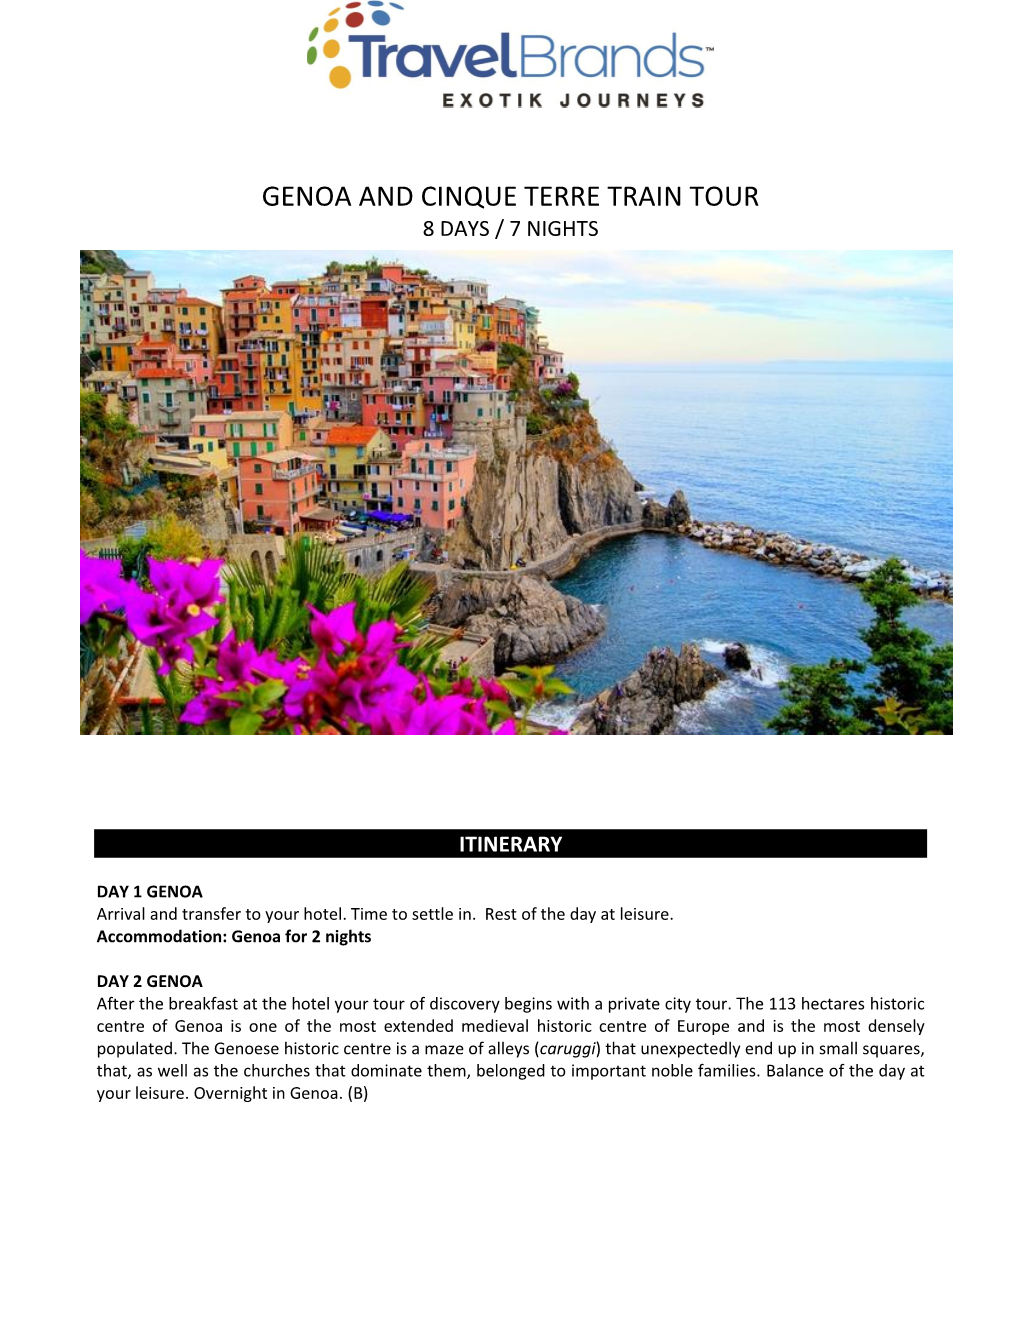 Genoa and Cinque Terre Train Tour 8 Days / 7 Nights